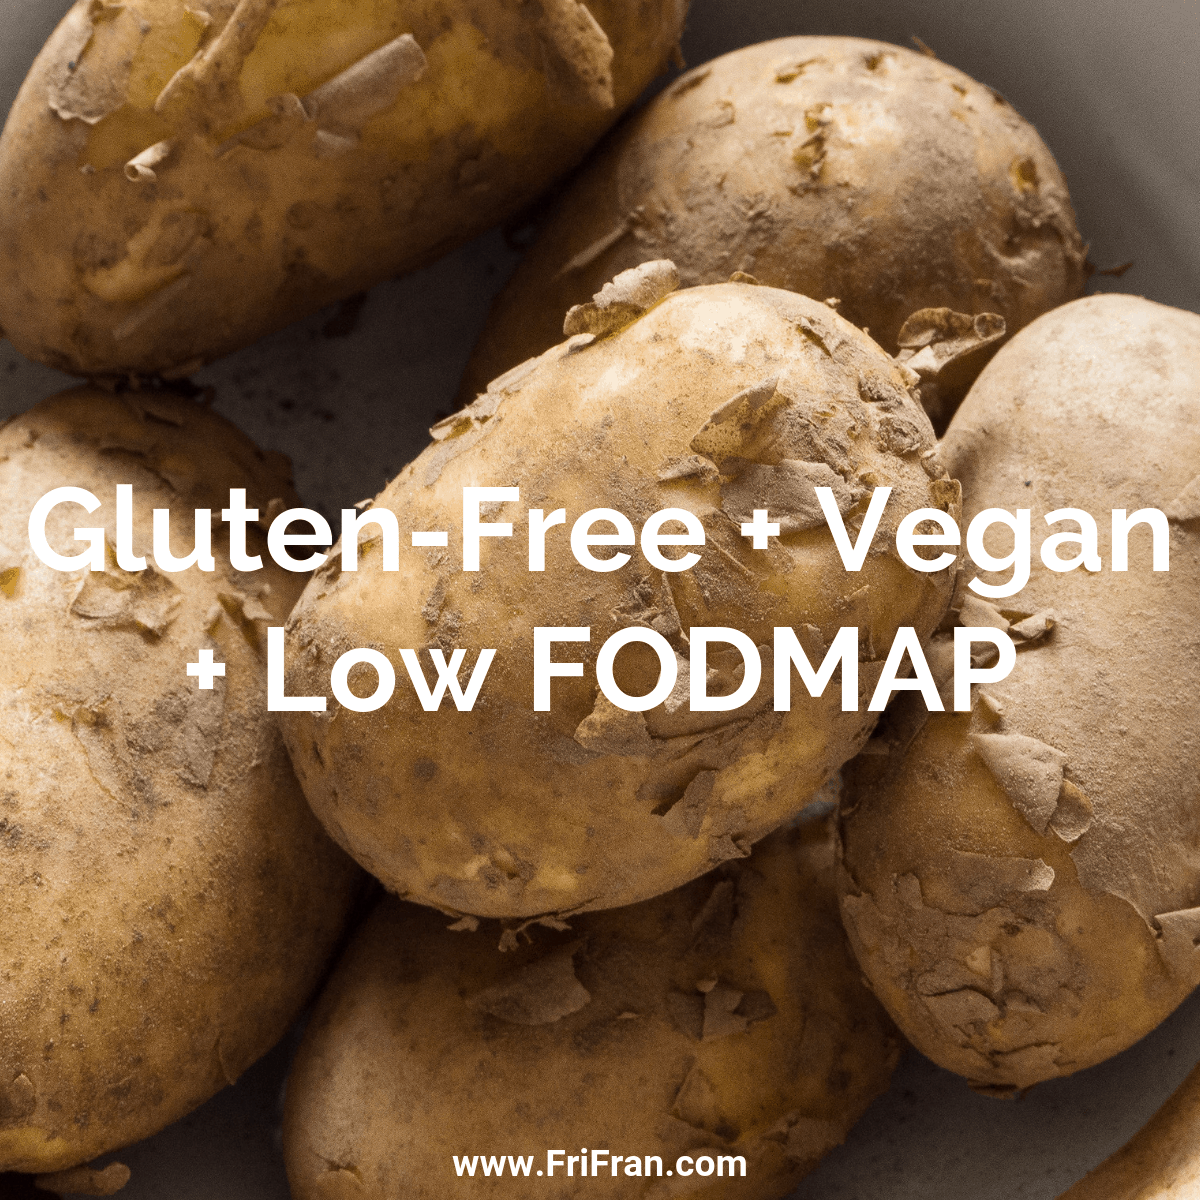 Gluten-Free and Vegan and Low FODMAP. #GlutenFree #Vegan #GlutenFreeVegan. From #FriFran